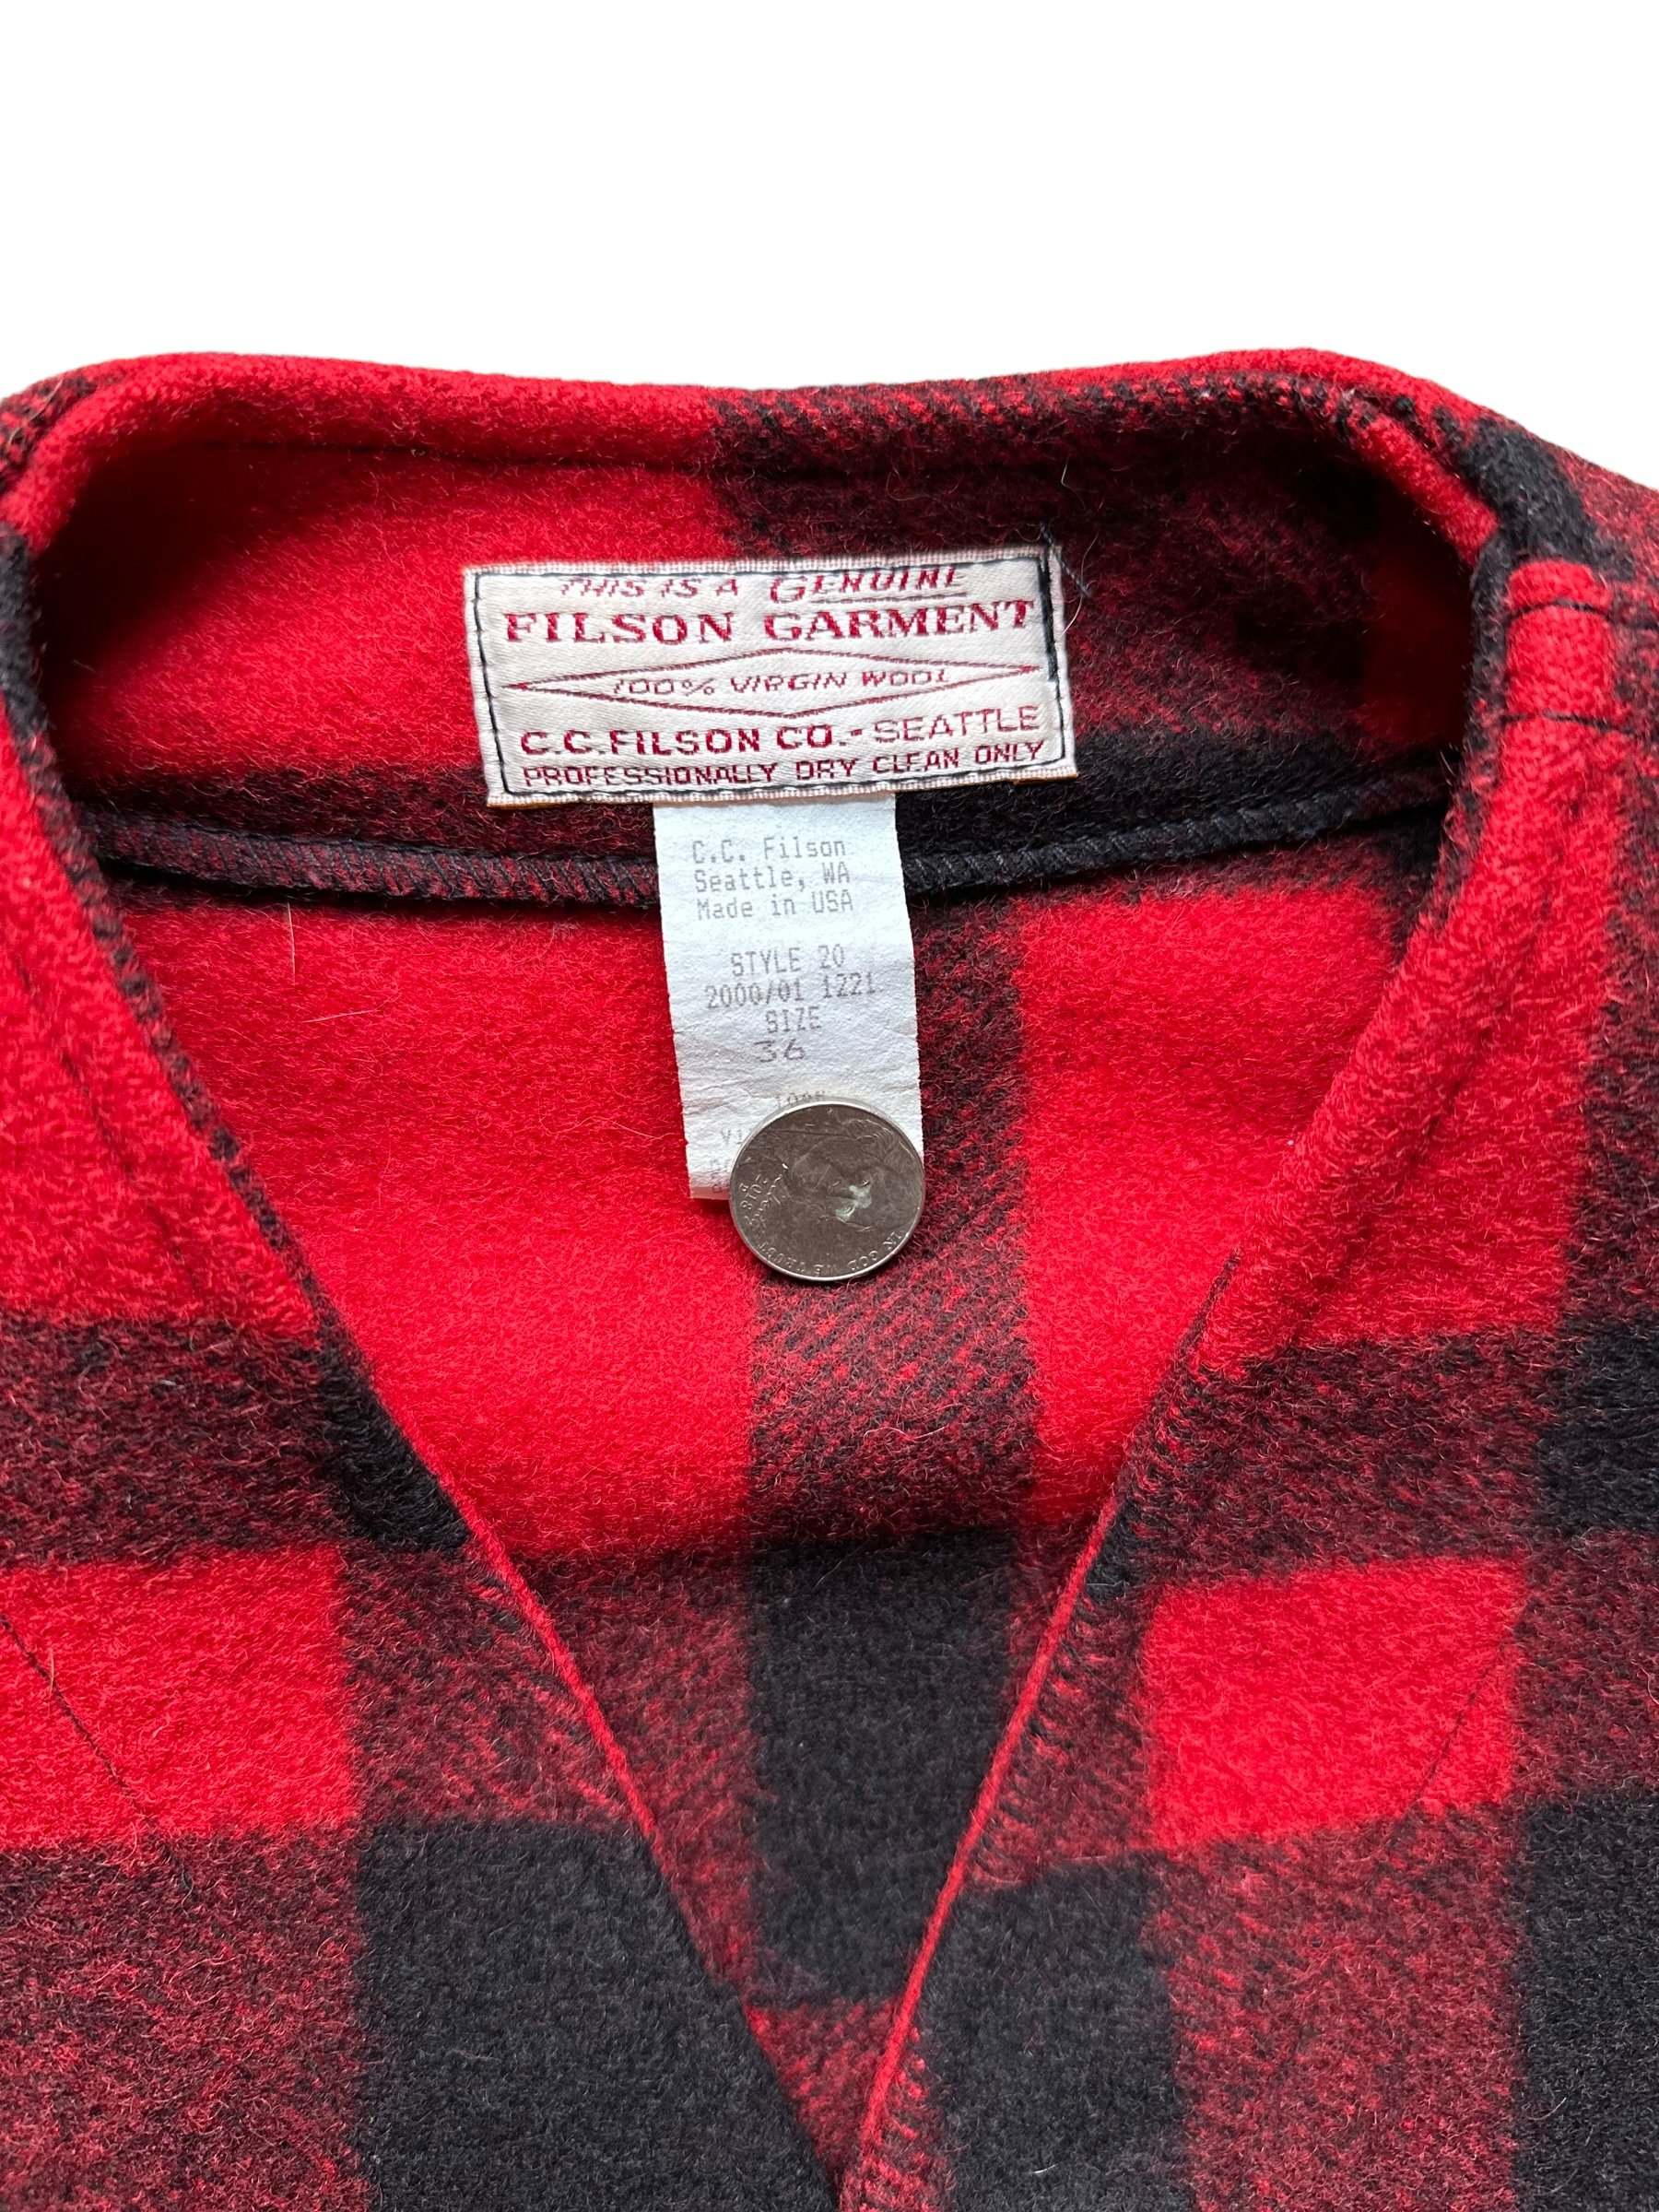 Tag View of Vintage Filson Mackinaw Vest SZ 36 |  Red & Black Mackinaw Wool | Seattle Workwear